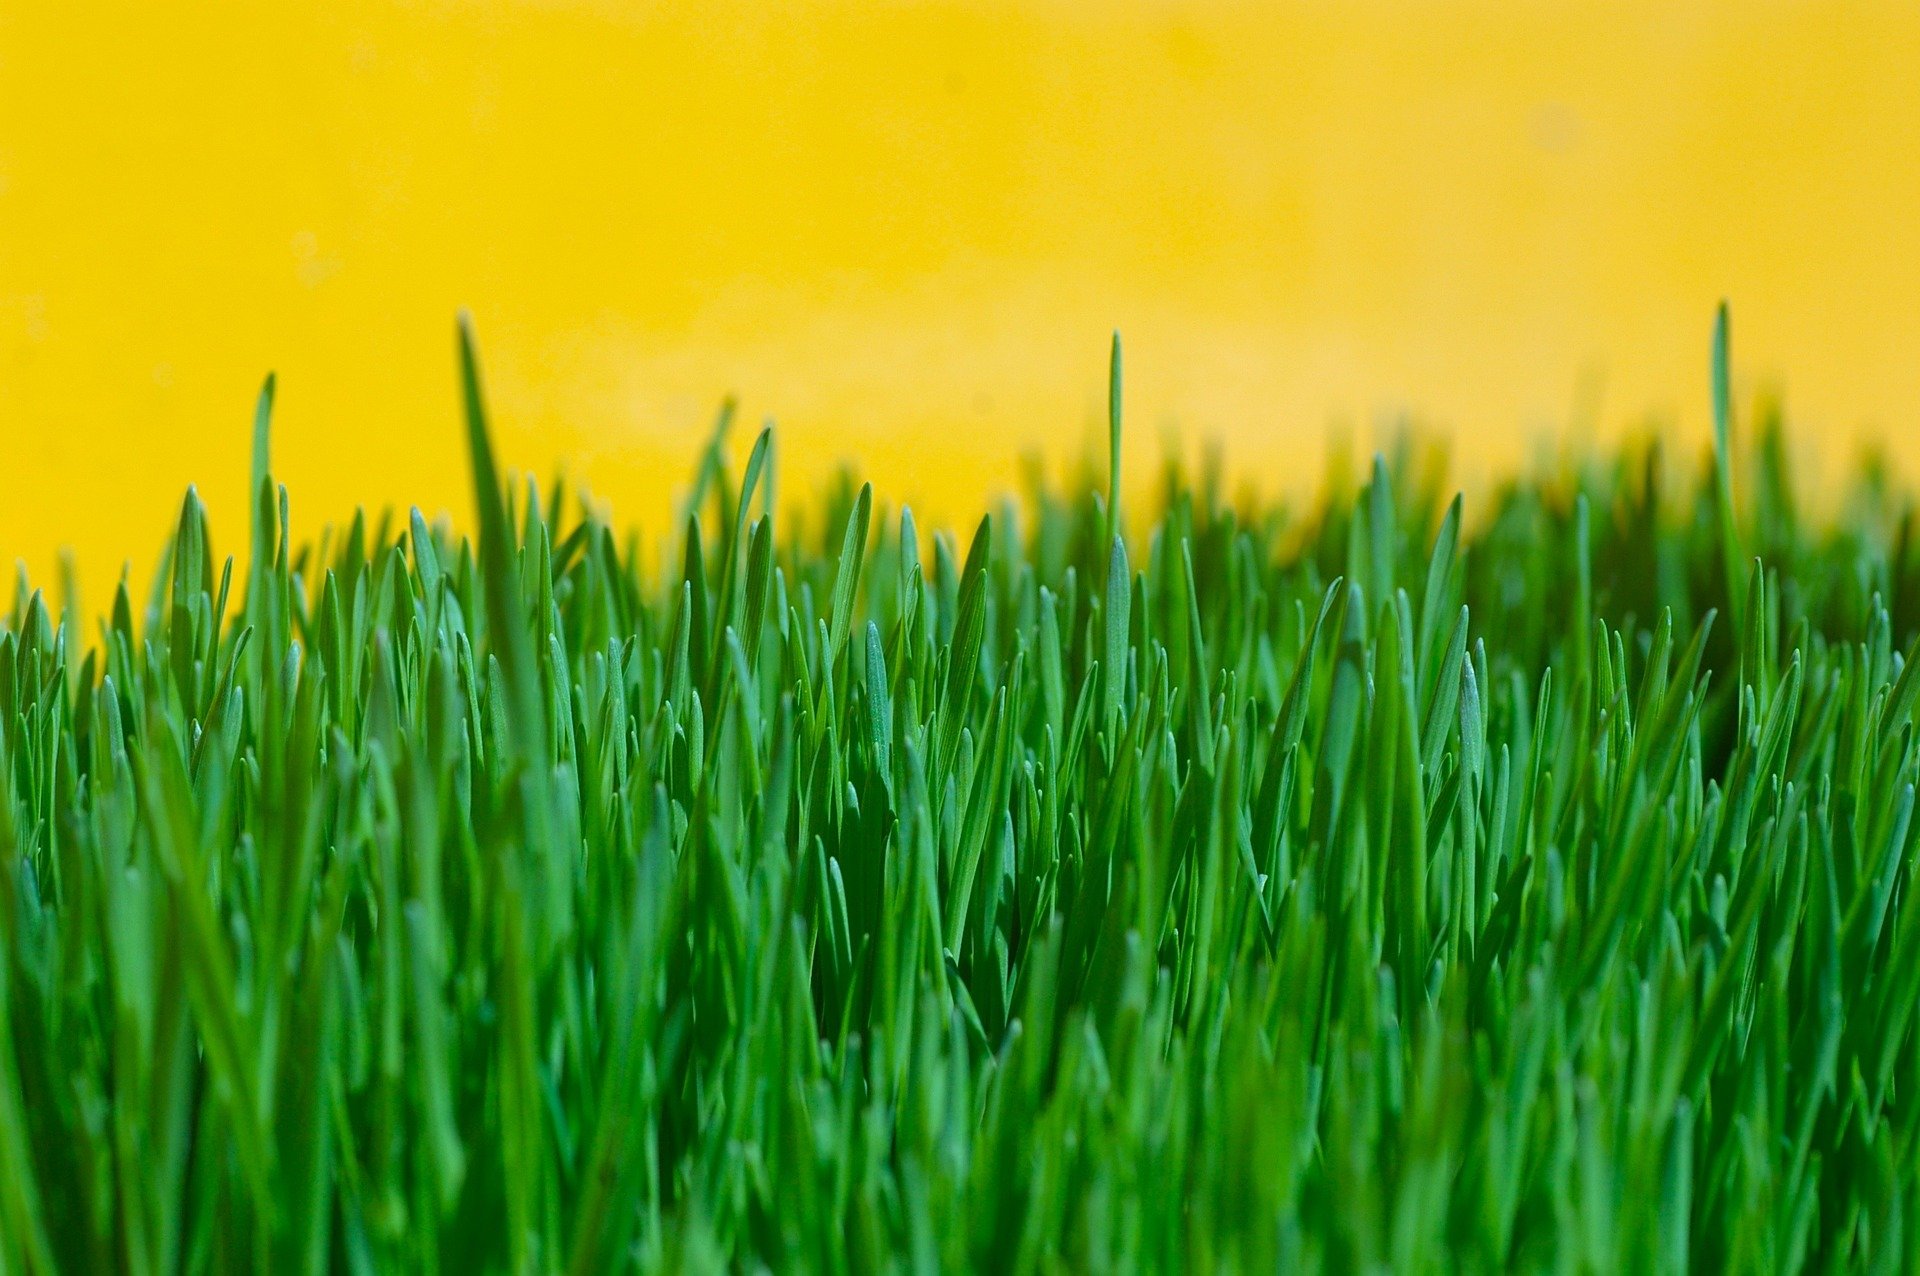 When Should I Fertilize My Lawn? [Video]